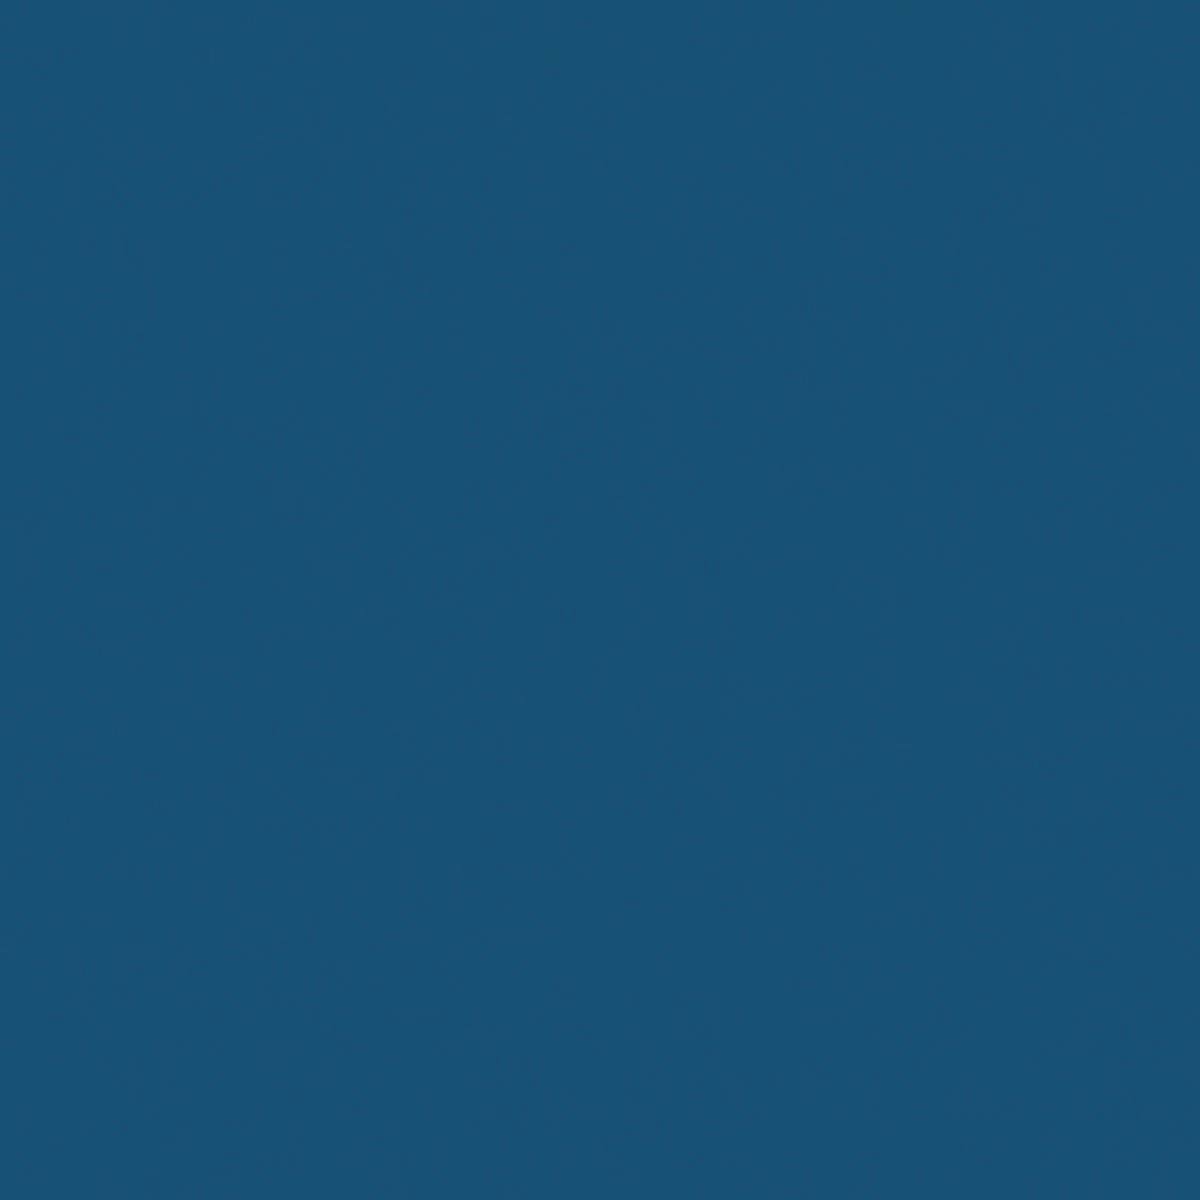 3M Scotchcal Pellicola colorata traslucida 3630-287 Blu marino 1,22 m x 45,7 m